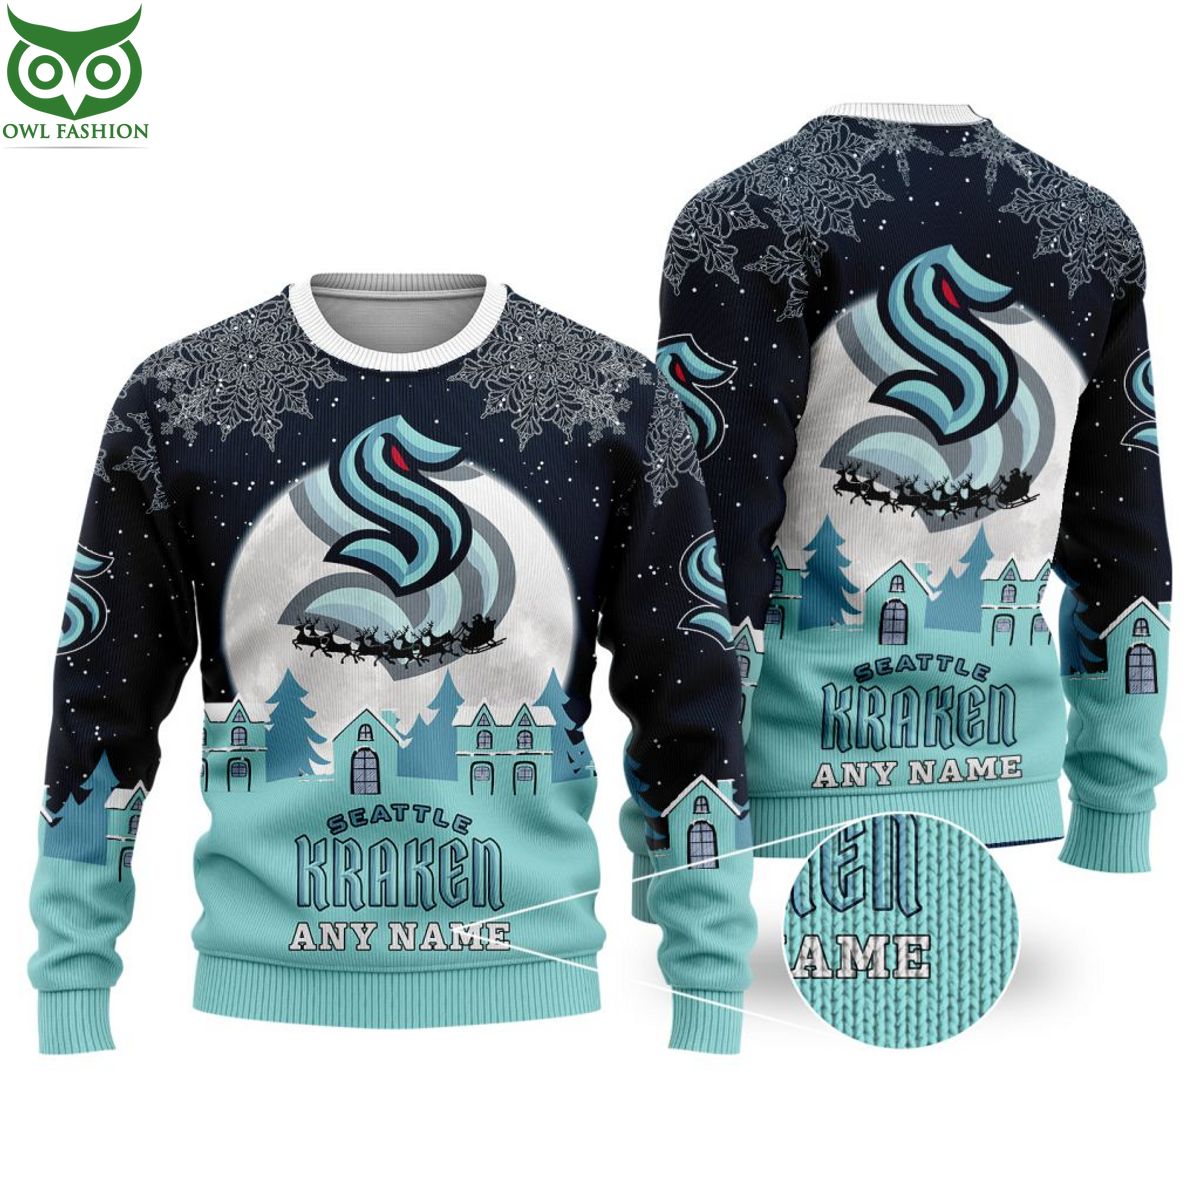 Seattle Kraken, Release The Kraken Version 3 | Essential T-Shirt